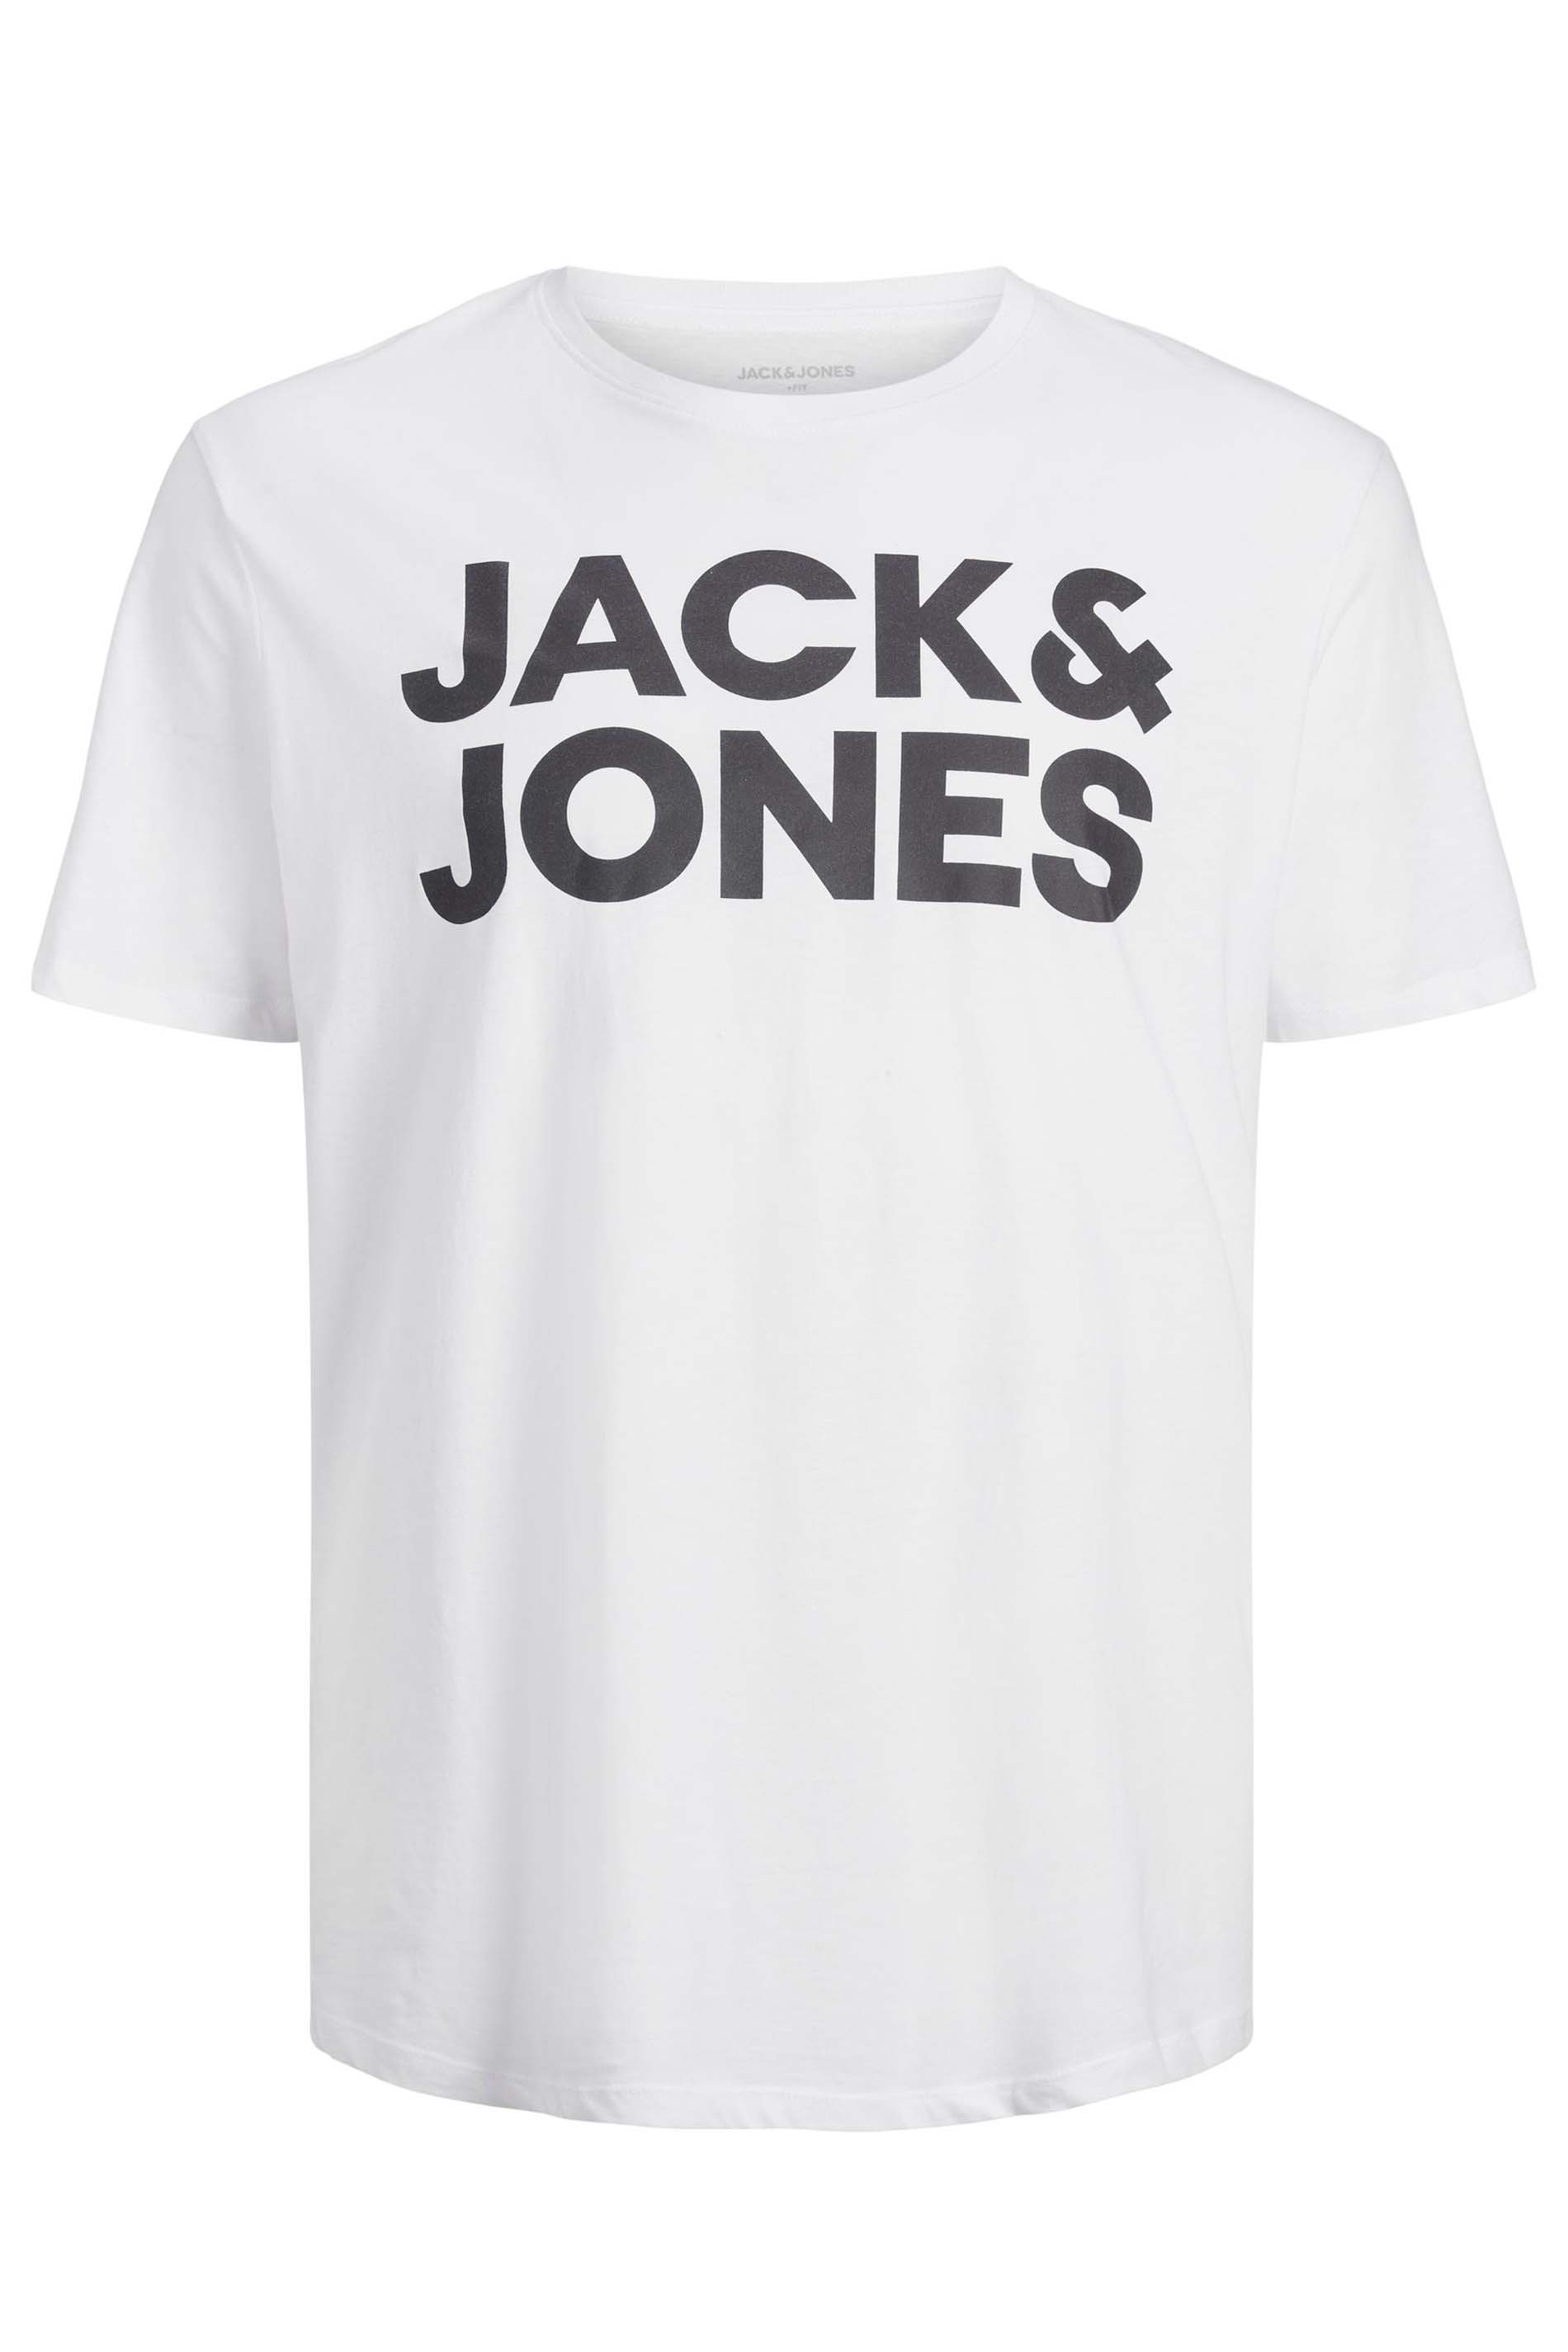 JACK & JONES Big & Tall White Logo Print T-Shirt | BadRhino